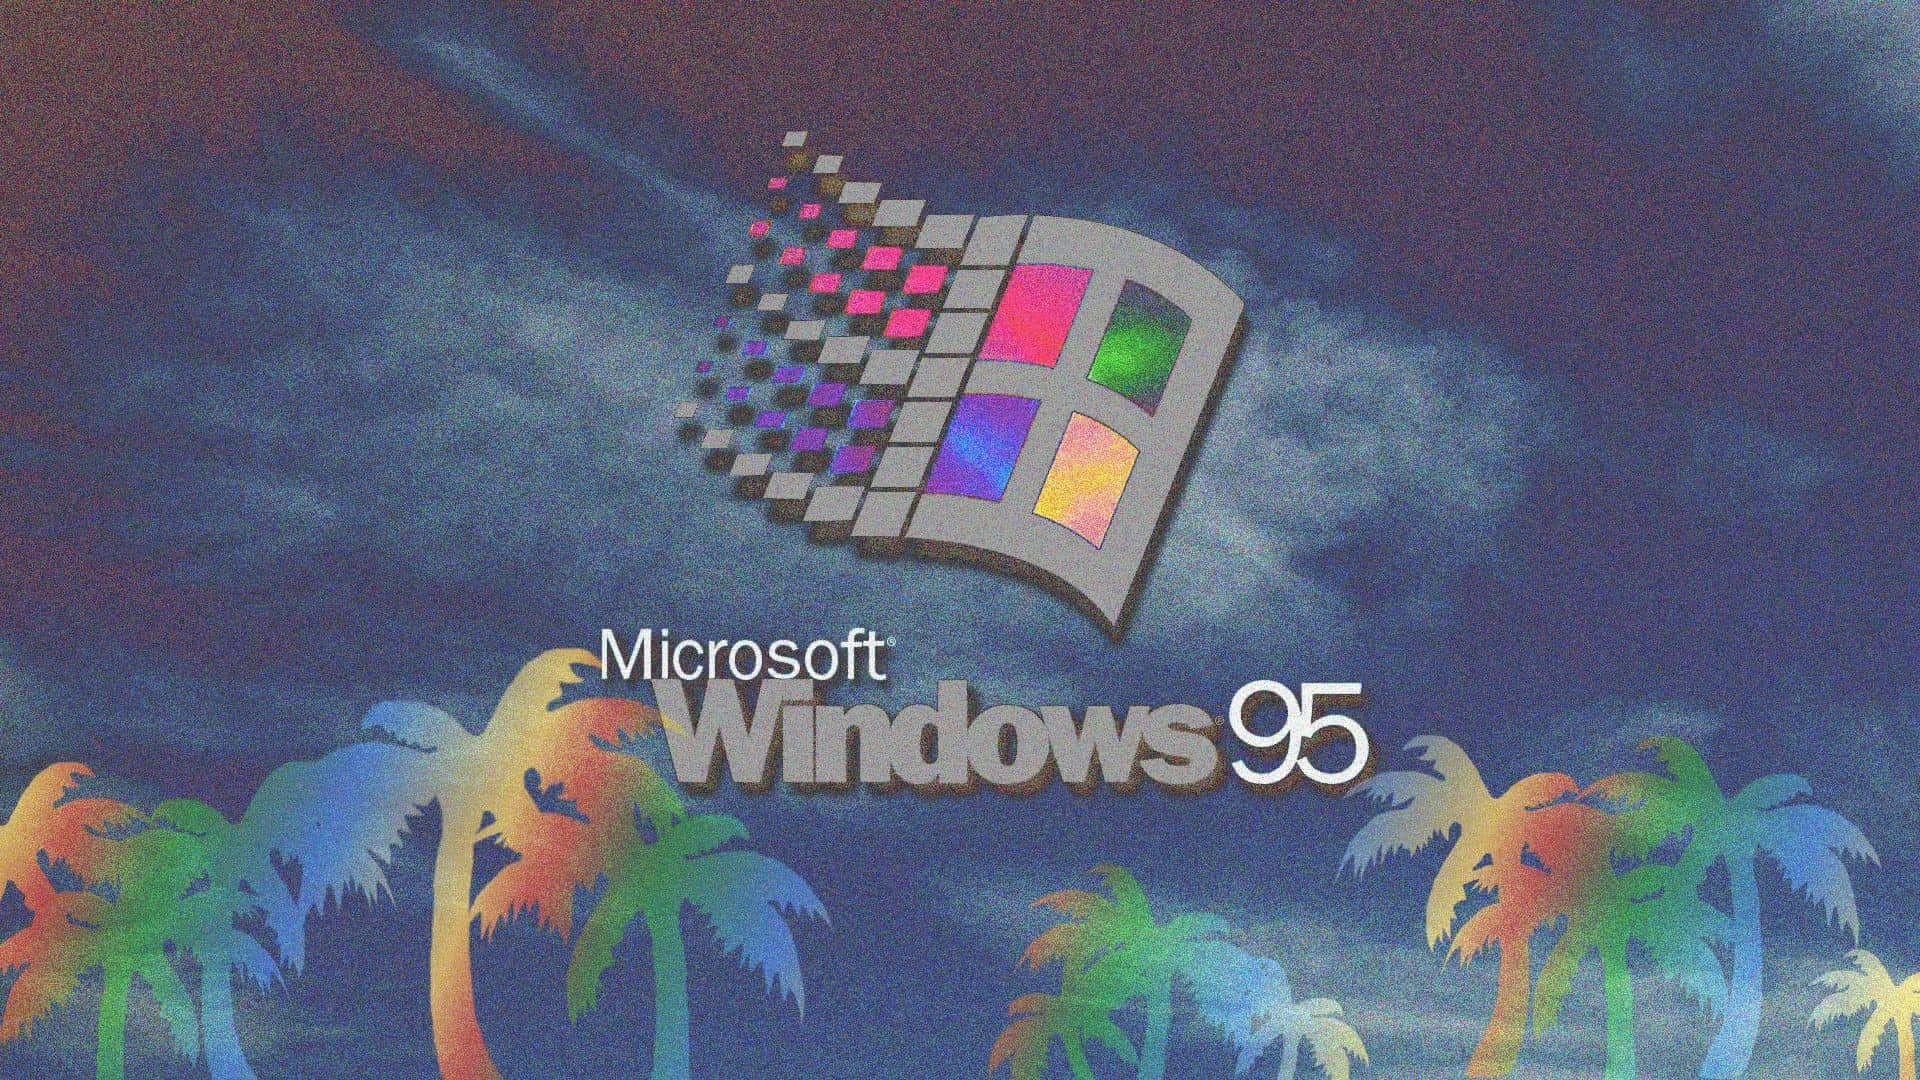 Windows 95 Revolutionized Personal Computing